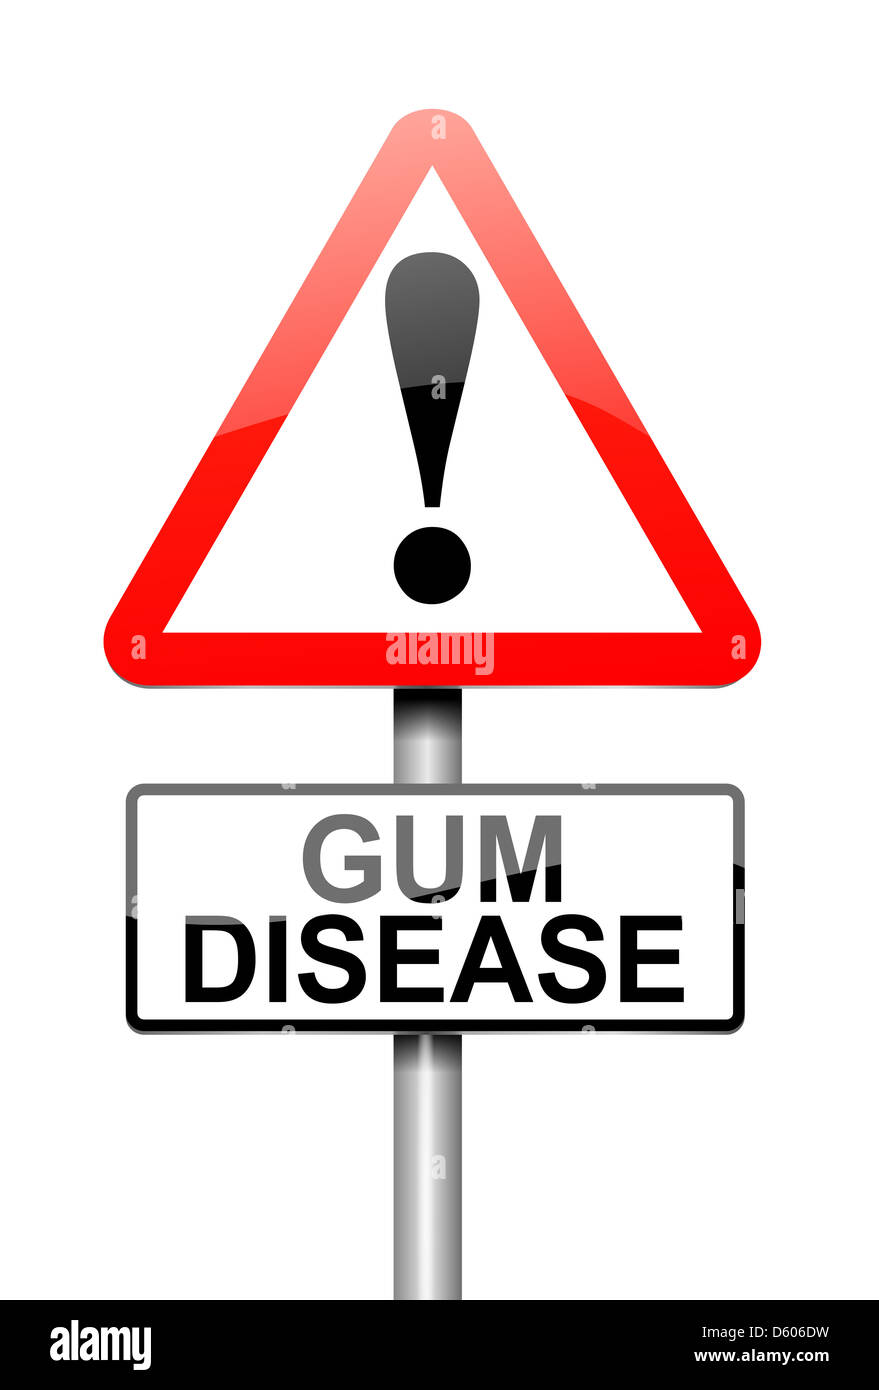 Gum disease. Stock Photo